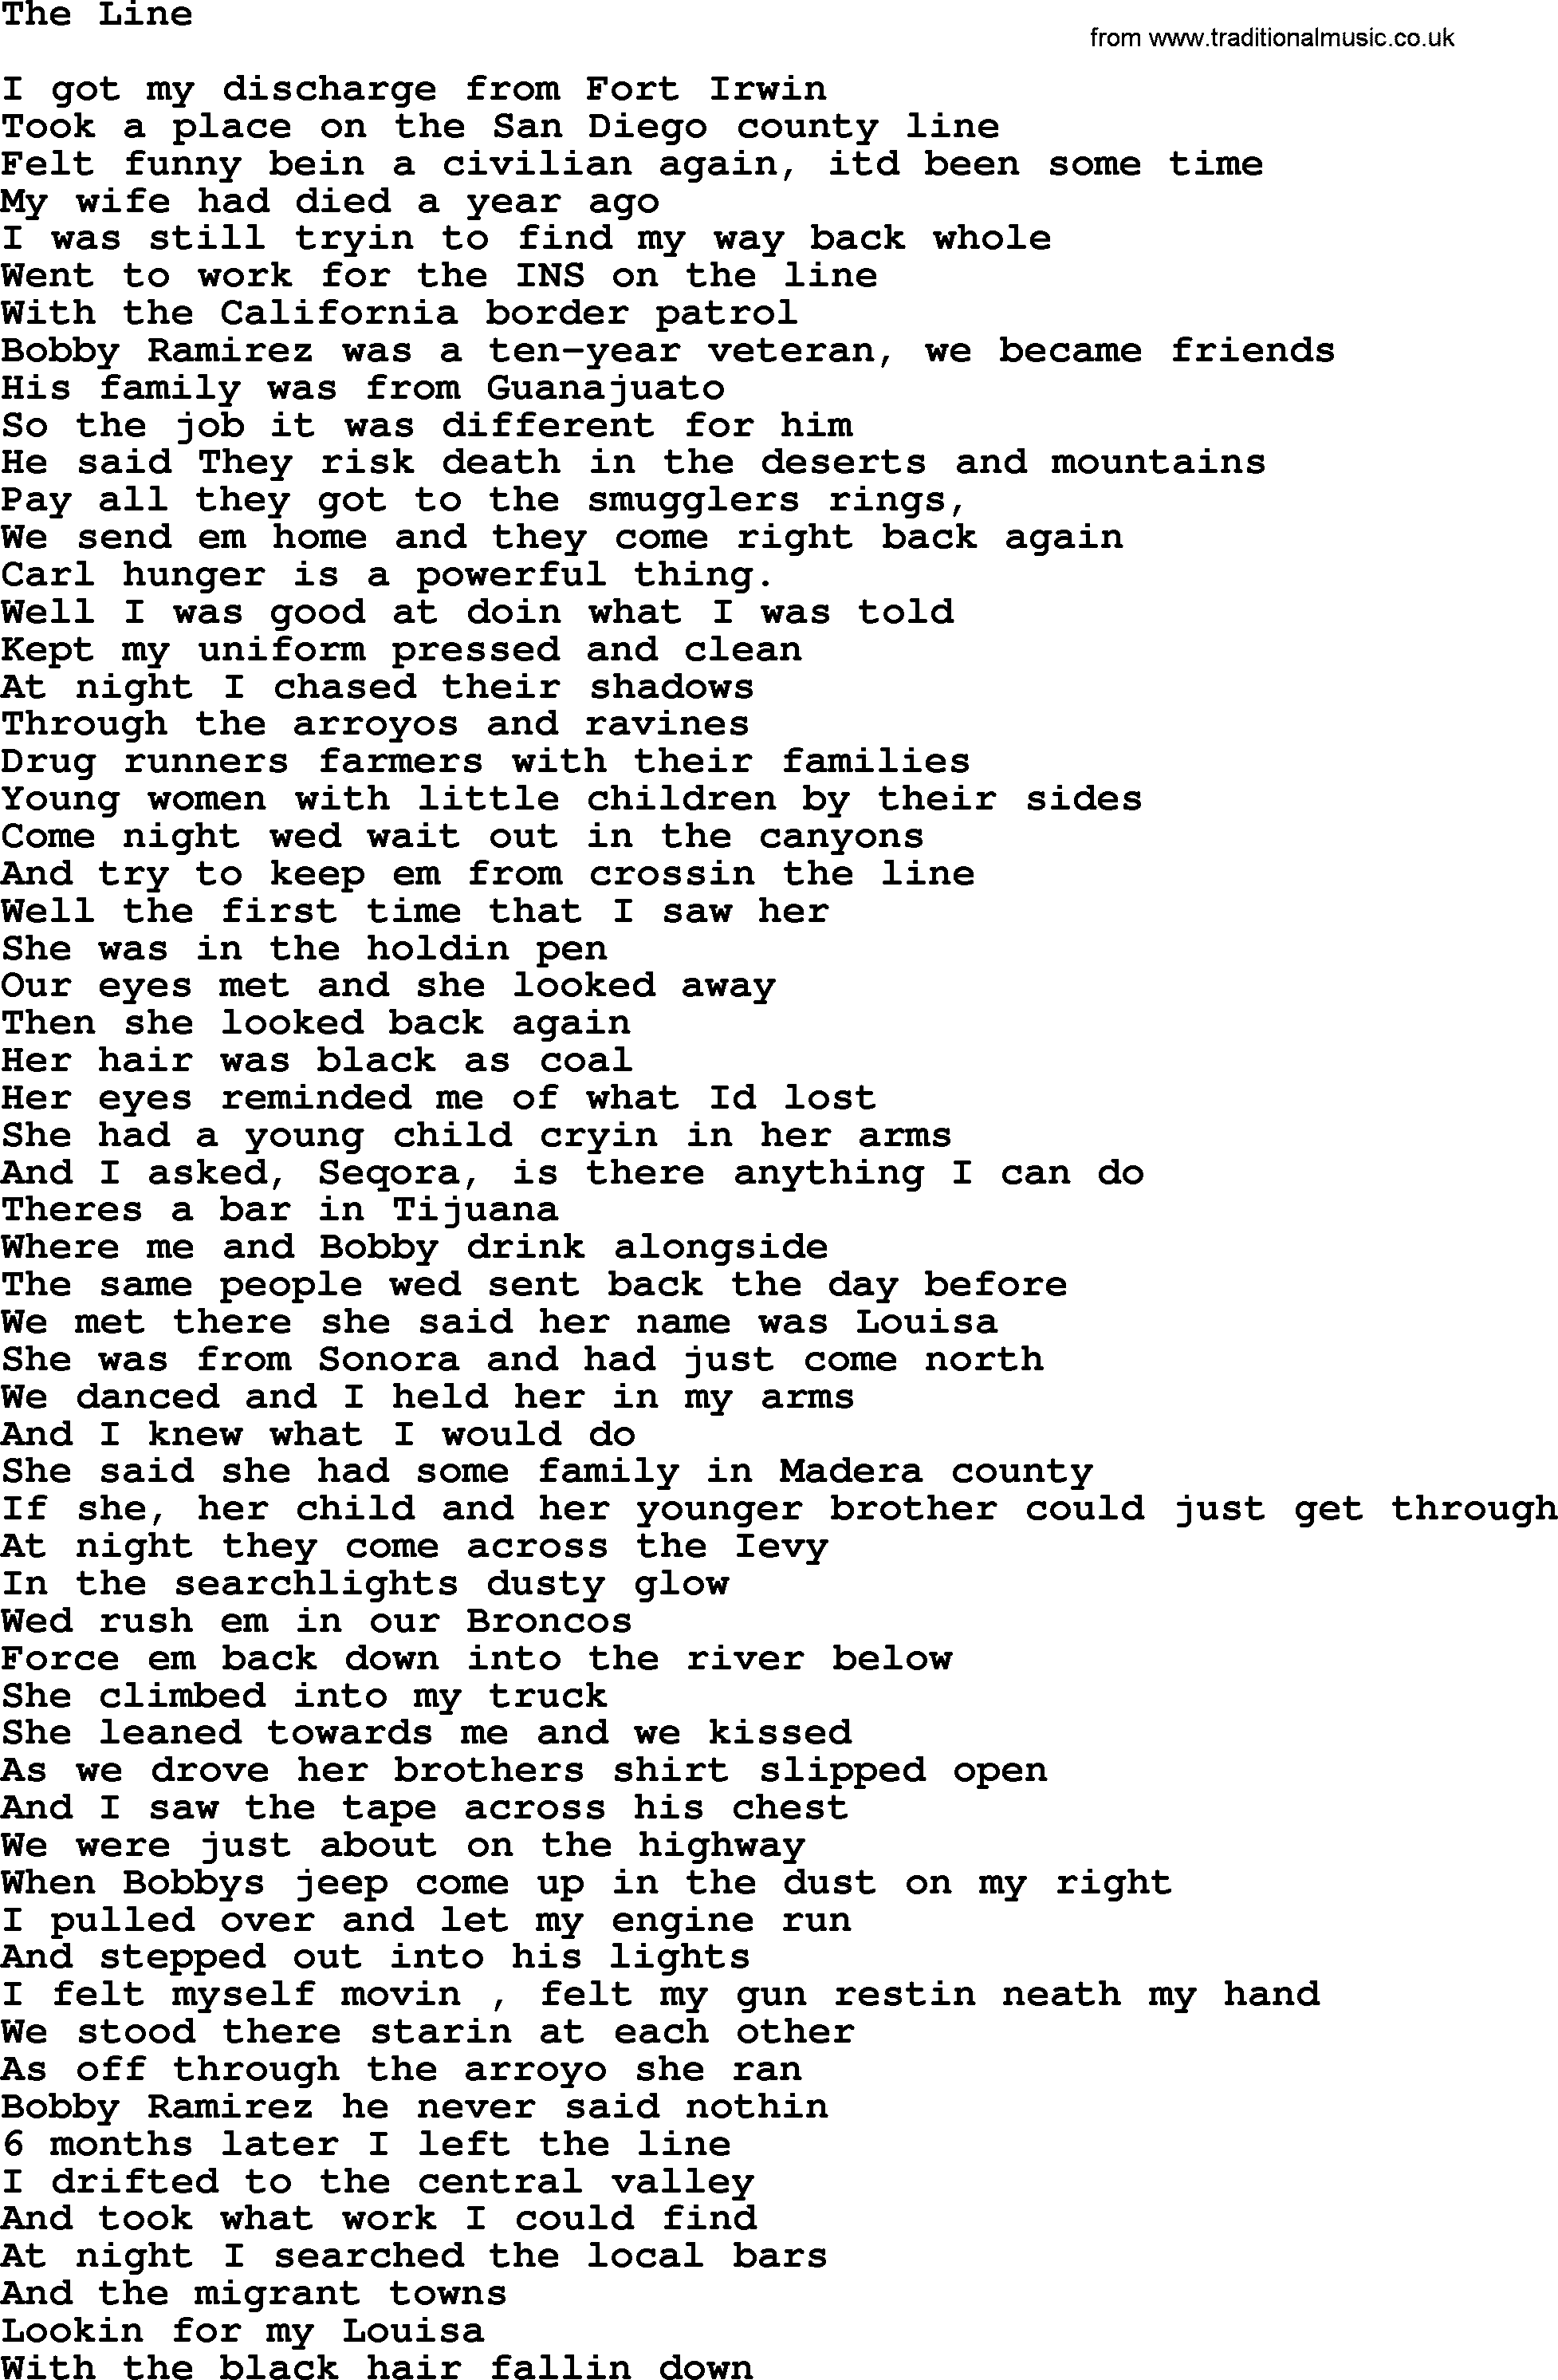 Bruce Springsteen song: The Line lyrics